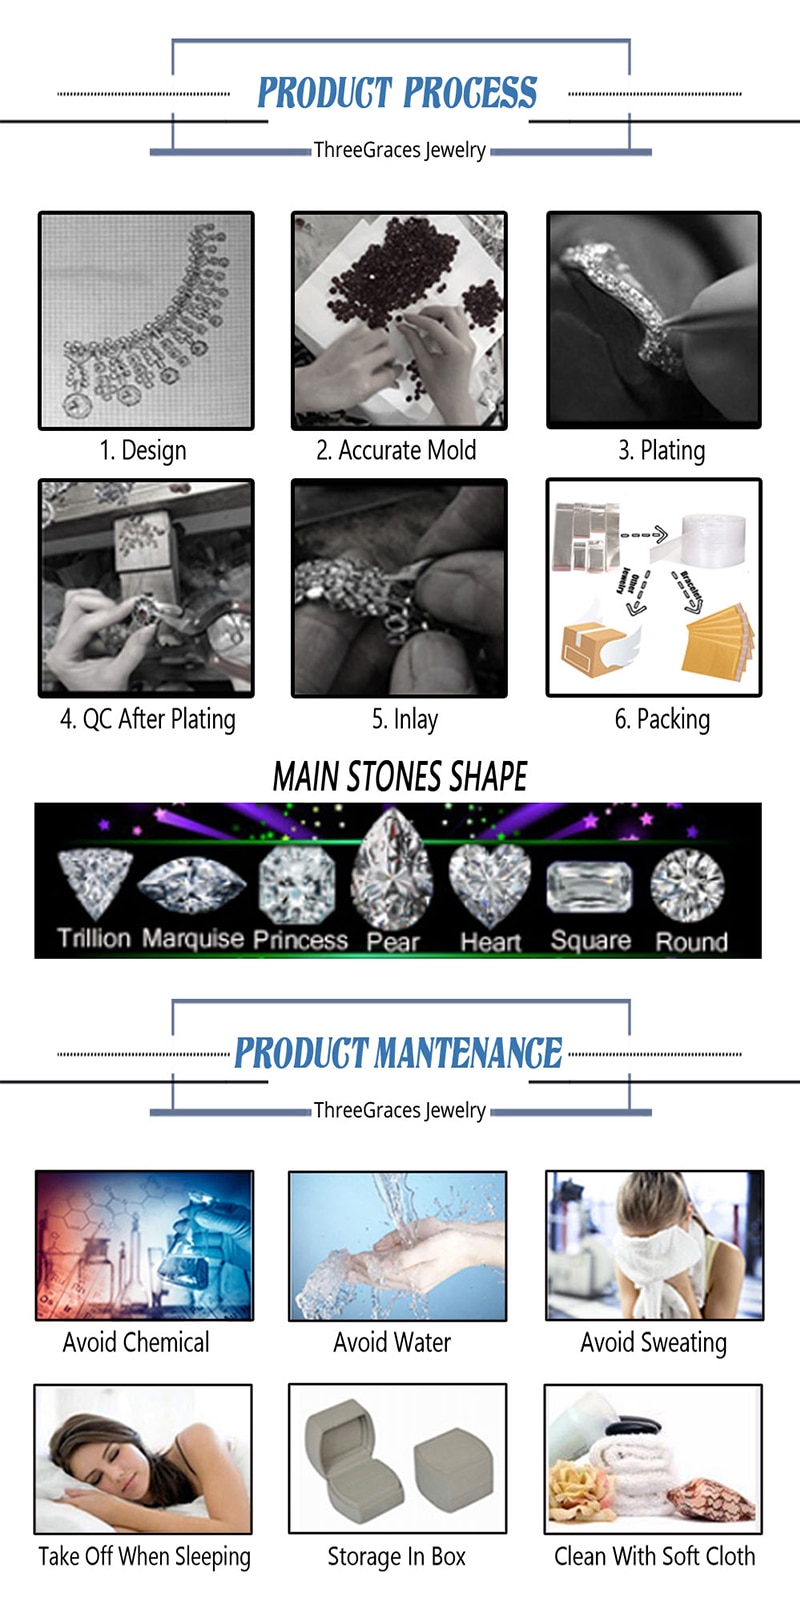 ThreeGraces-New-Design-3-Pcs-CZ-Cute-Butterfly-Bridal-Wedding-Big-Necklace-Earrings-Bracelet-Gold-Co-4001283536564-15